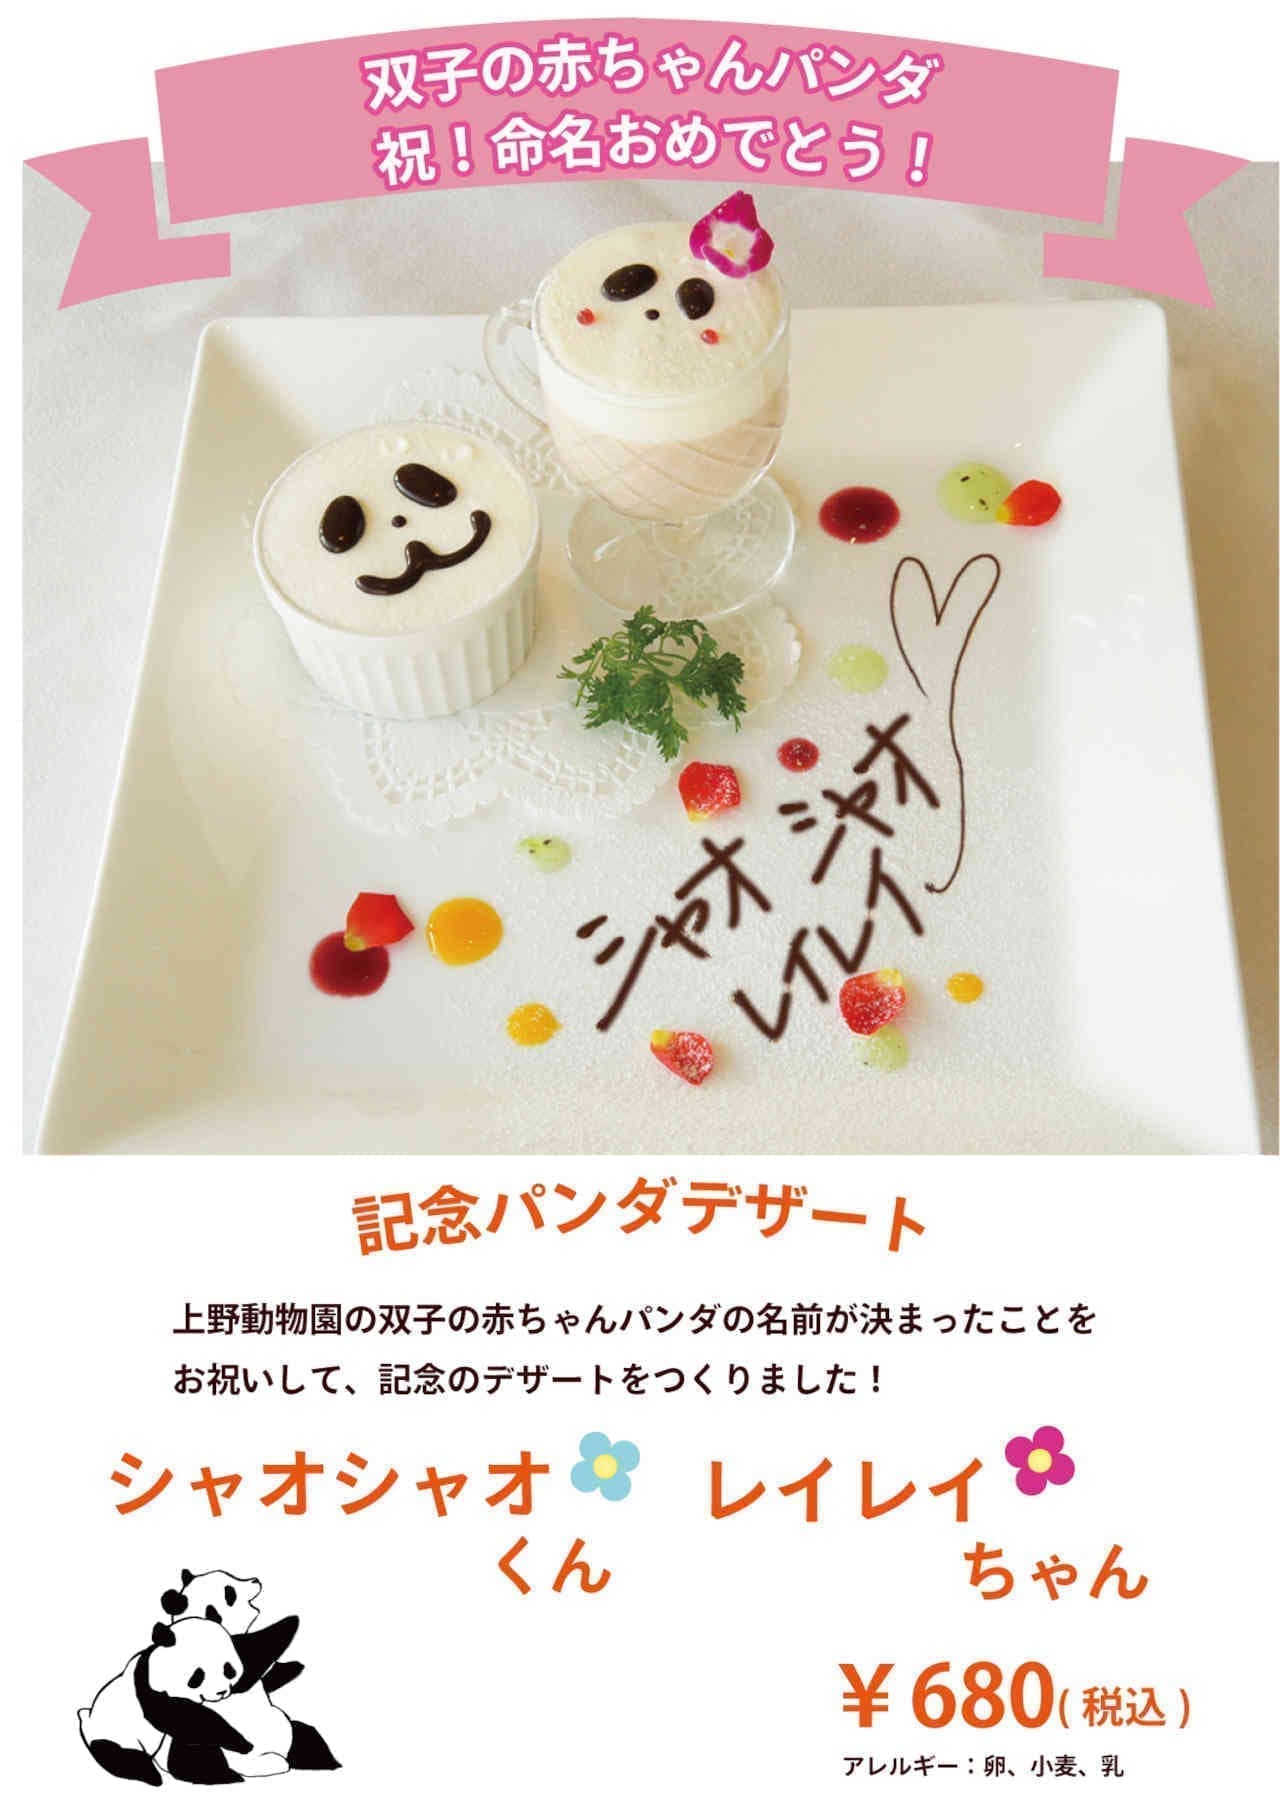 Ueno Seiyoken "Commemorative Panda Dessert"